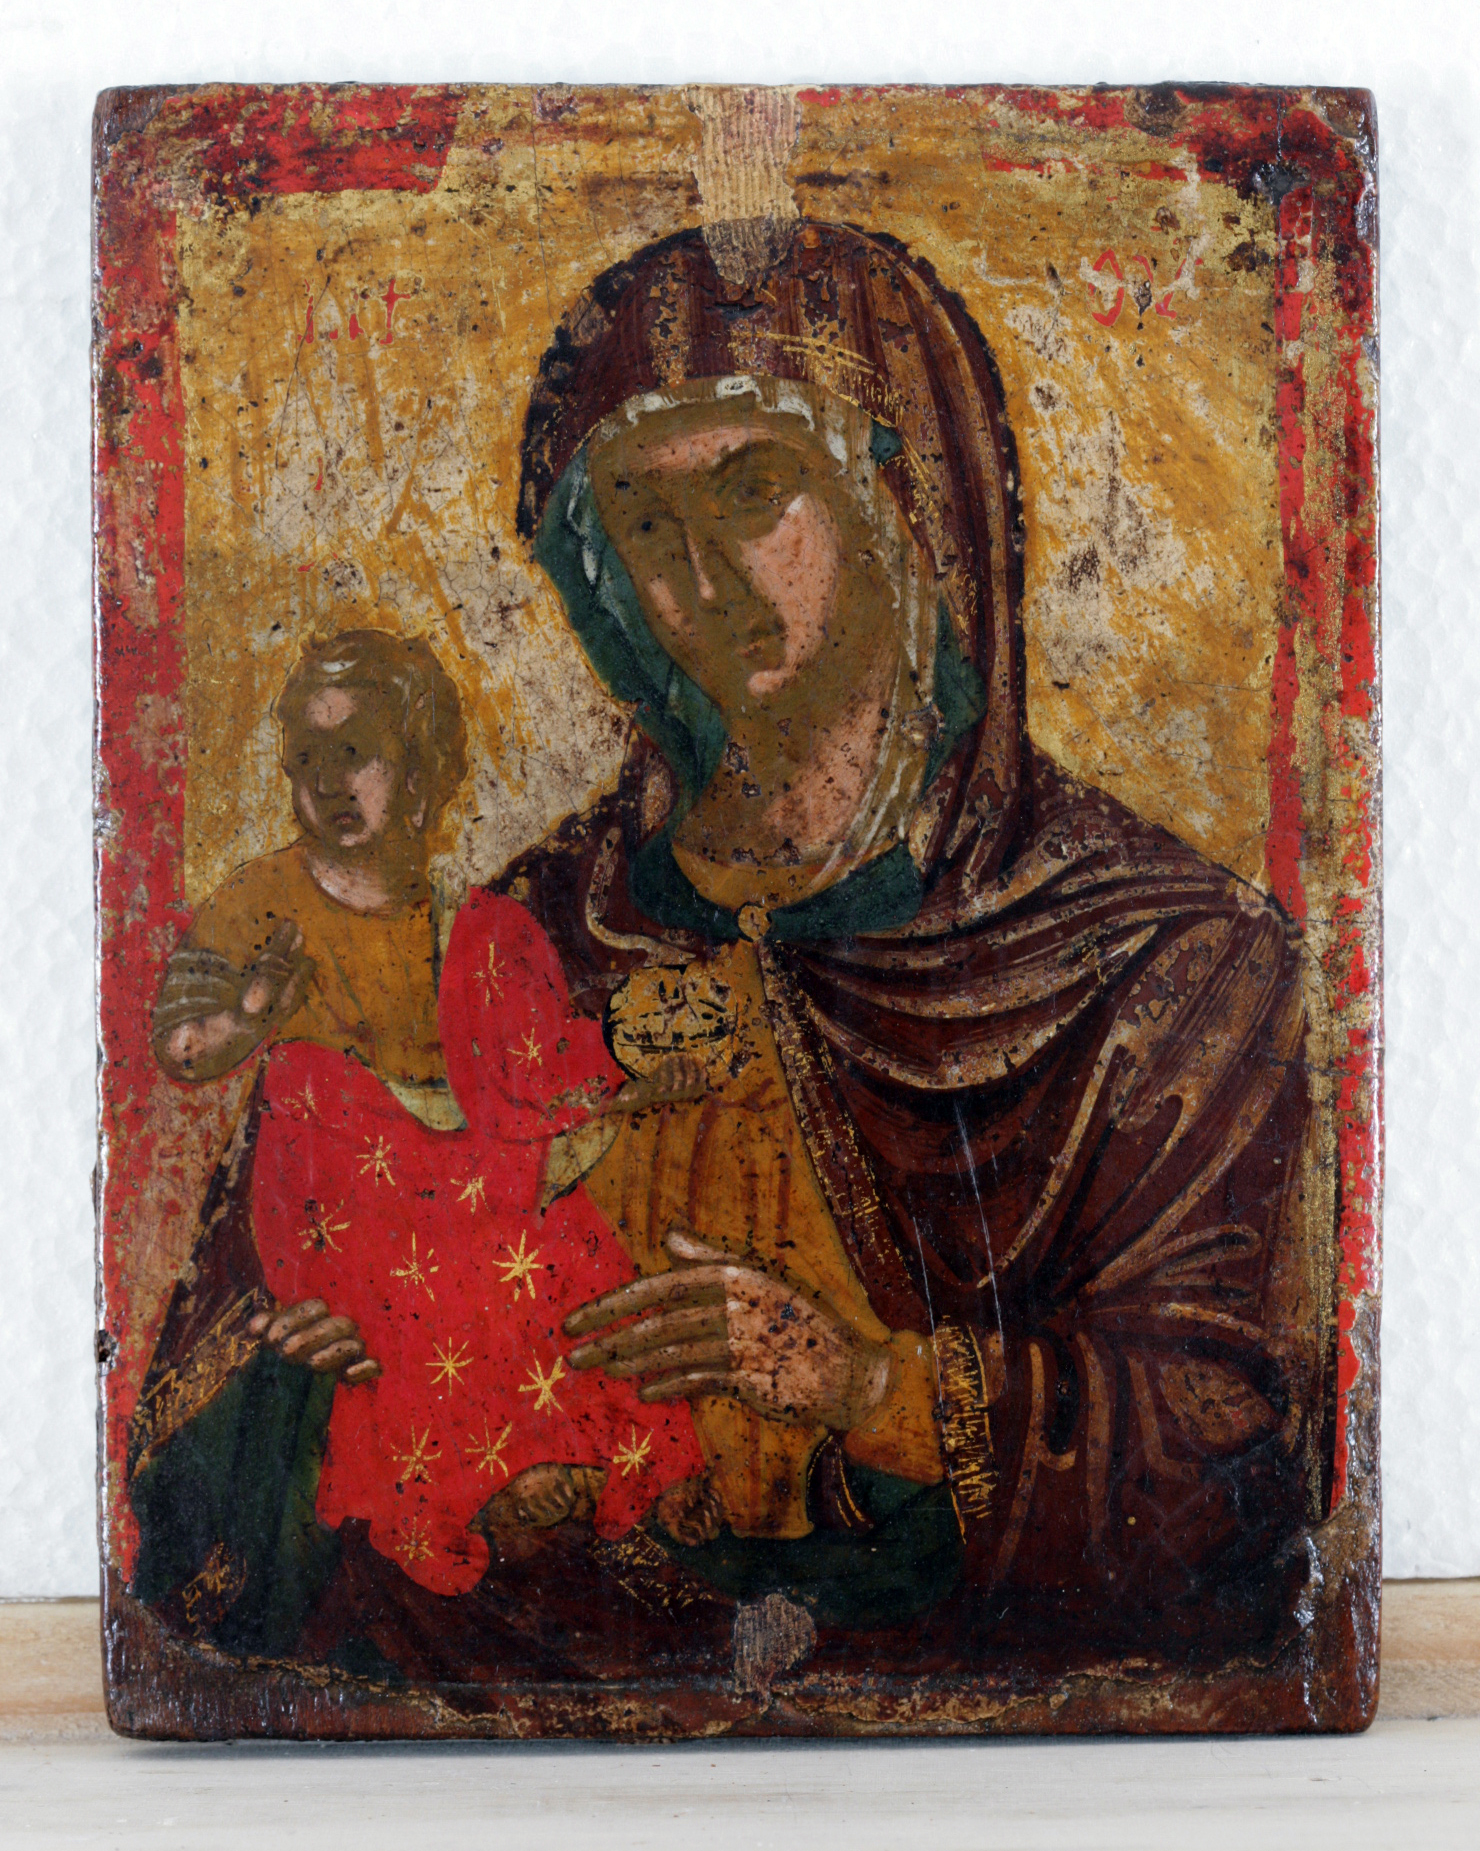 Vergine hodegetria (icona, opera isolata) - scuola cretese-veneziana (sec. XVII)